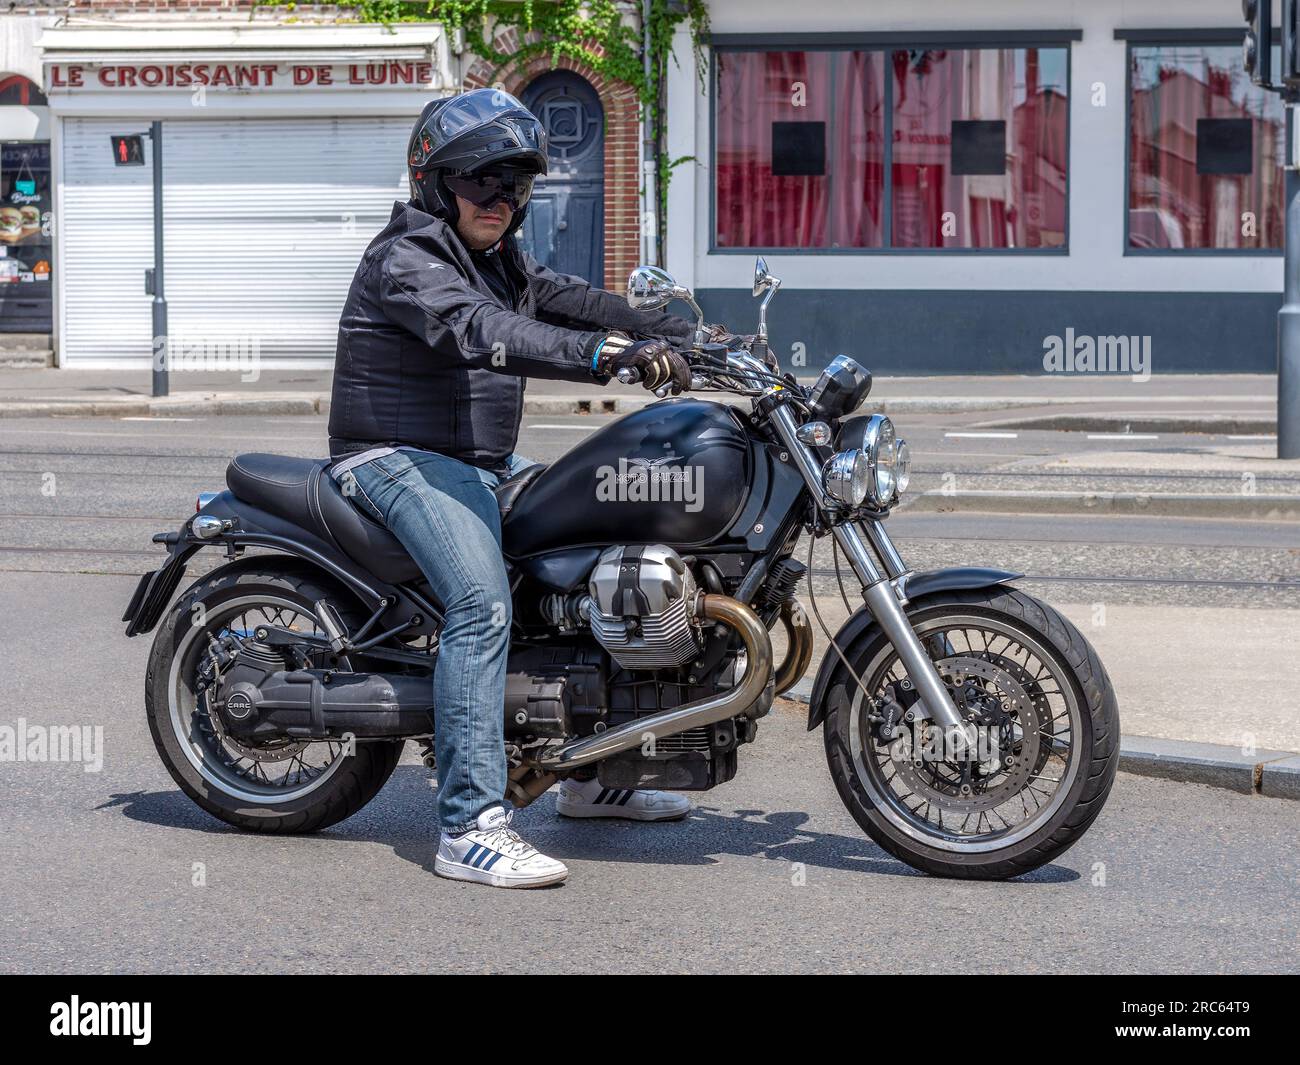 Guzzi motorbike hi-res stock photography and images - Alamy